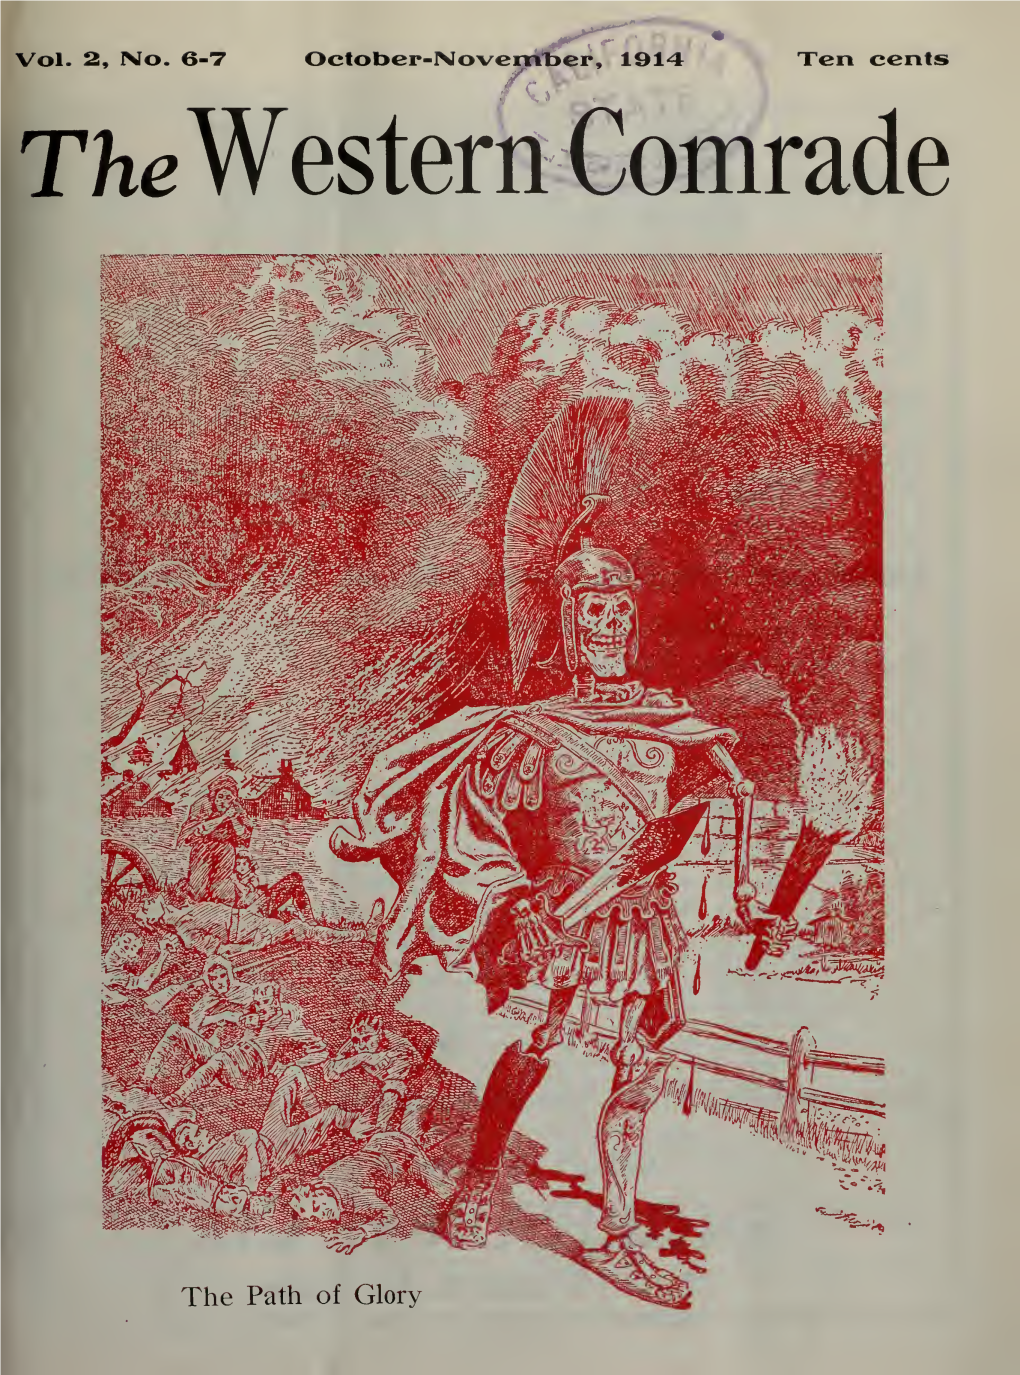 Western Comrade the Western Comrade